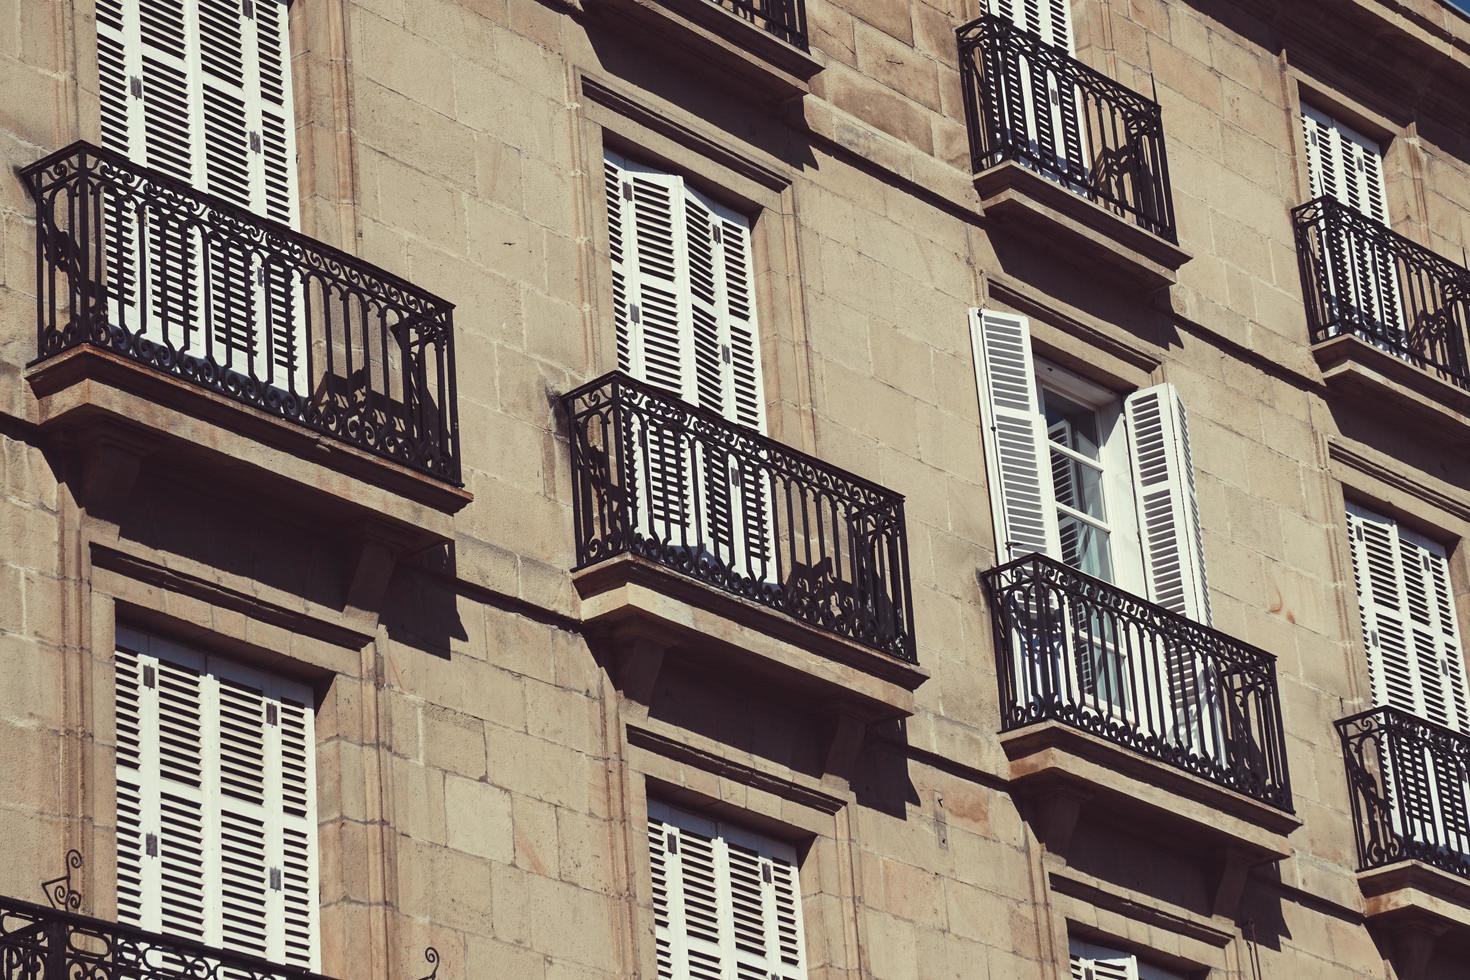 balkong på fasaden av huset, arkitektur i staden Bilbao, Spanien foto